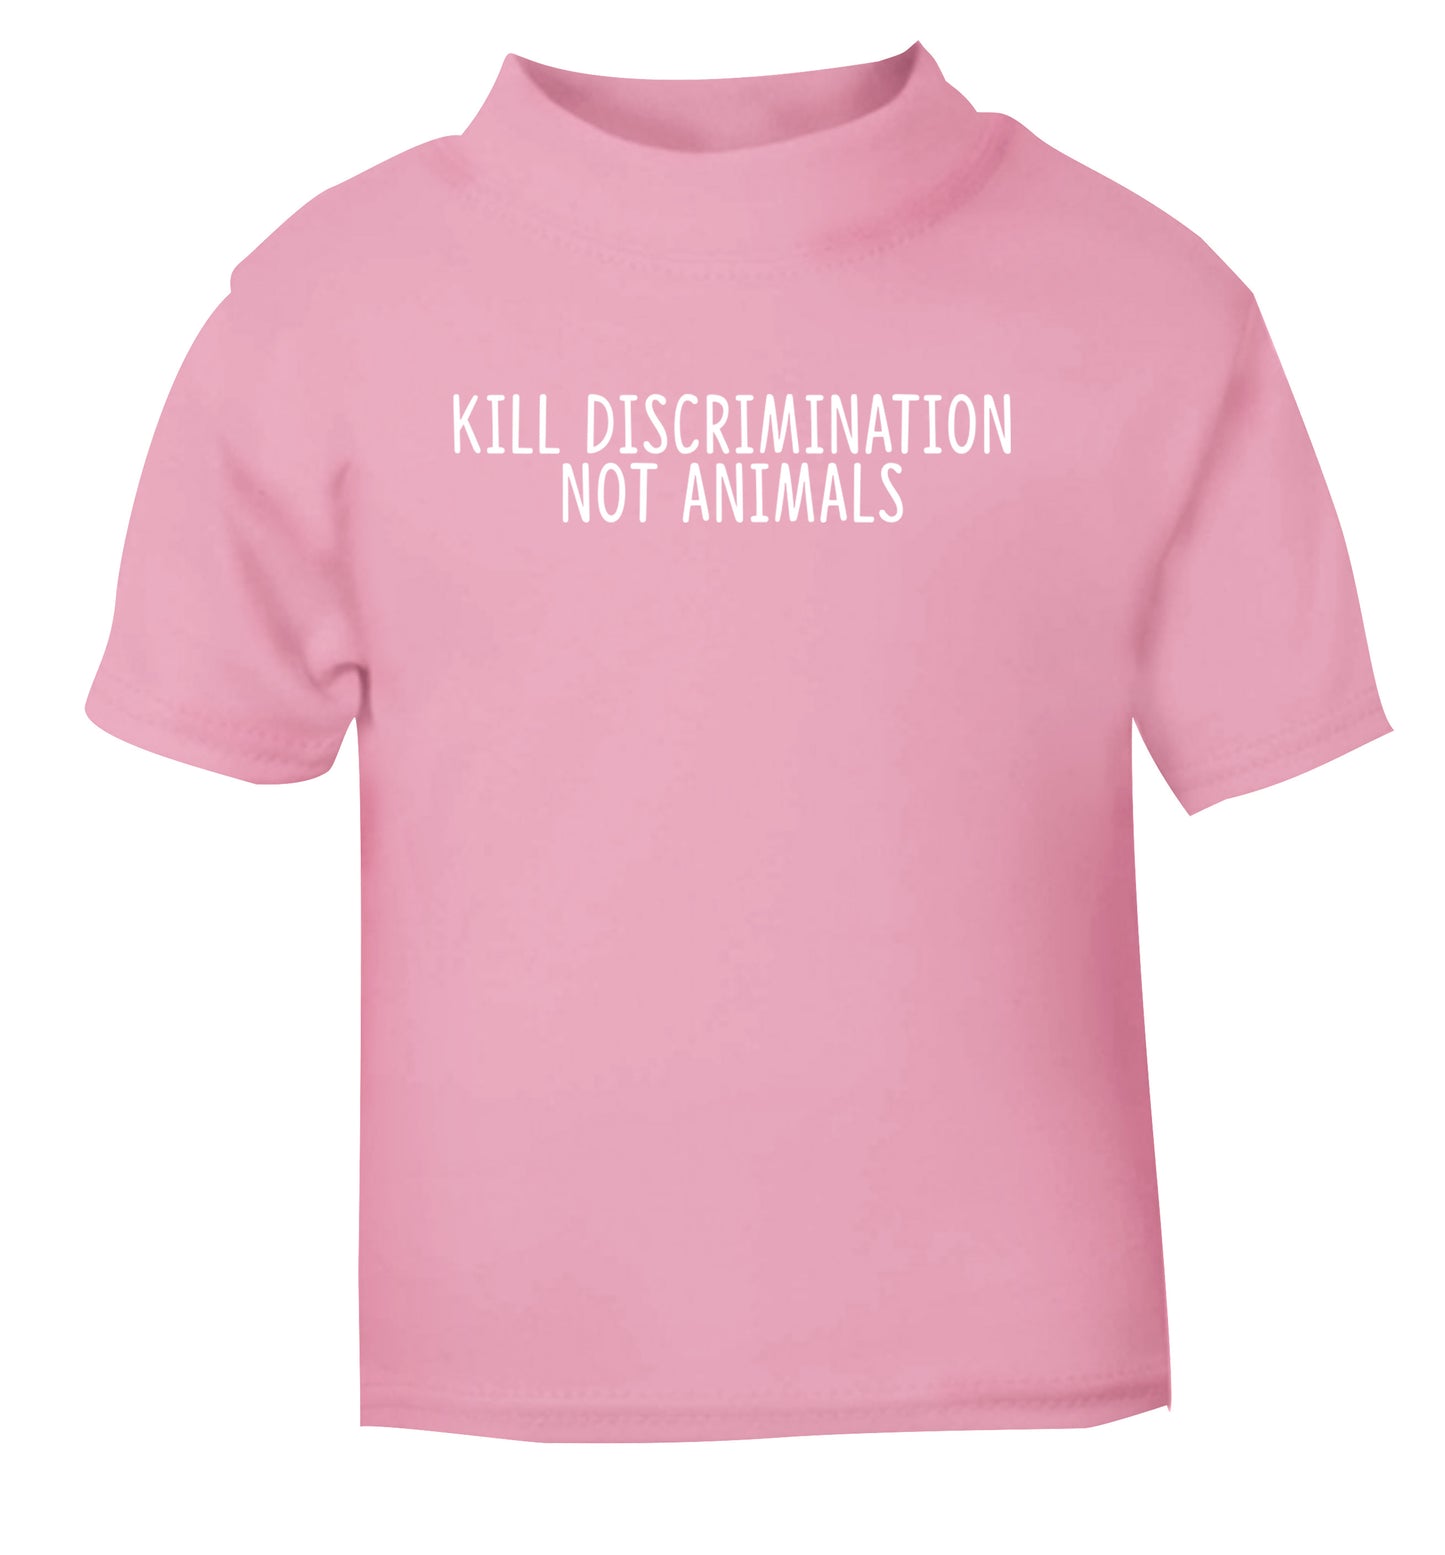 Kill Discrimination Not Animals light pink Baby Toddler Tshirt 2 Years